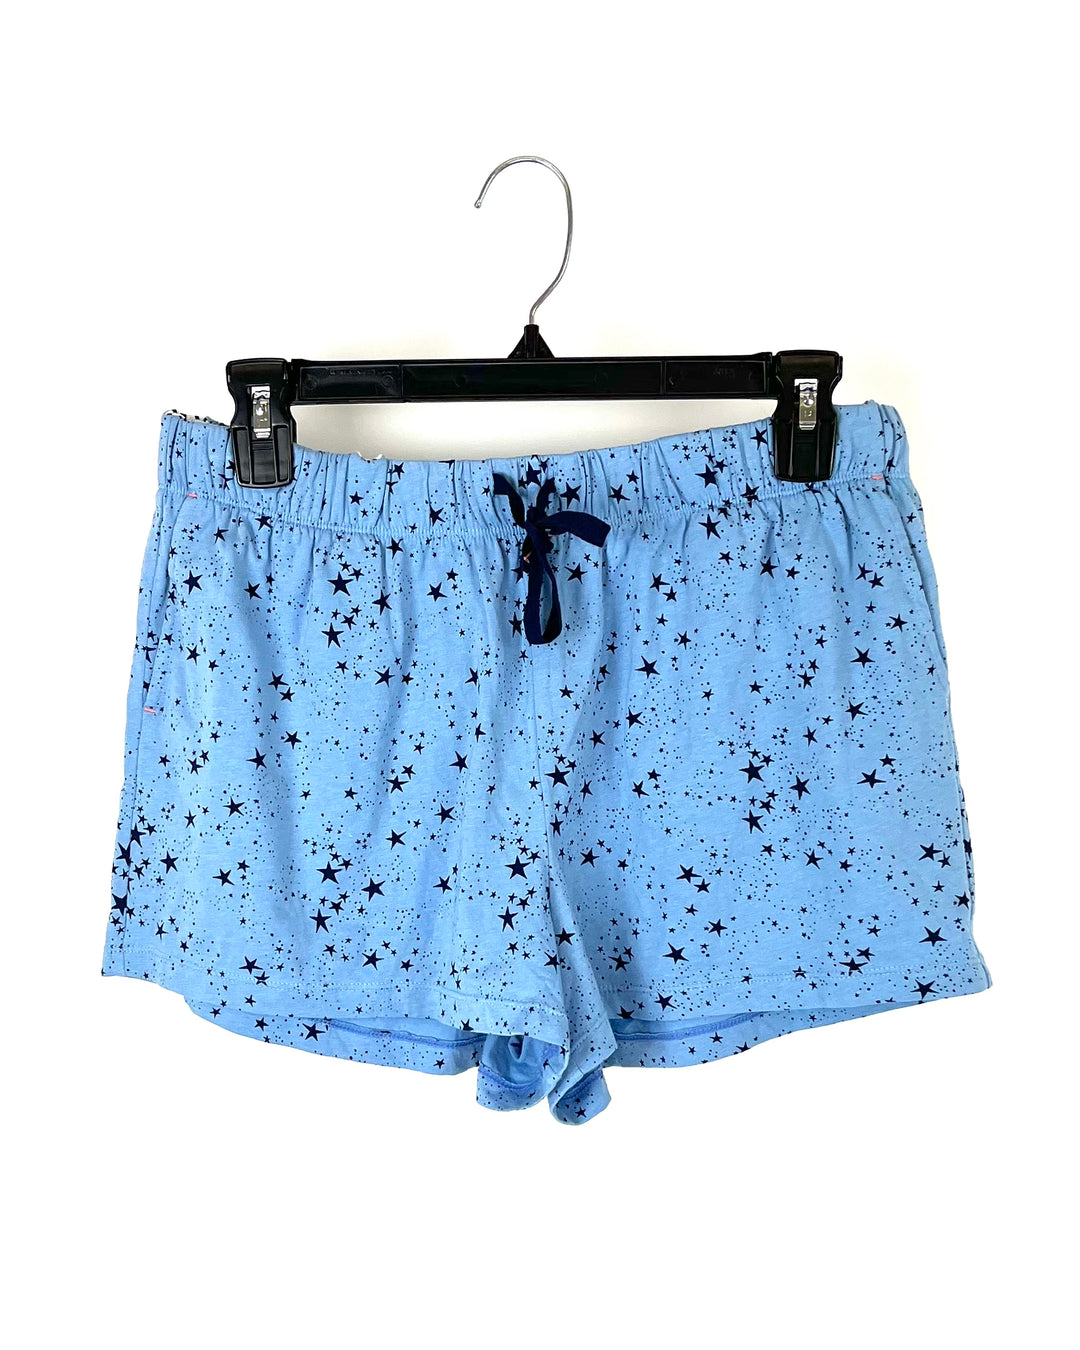 Blue Star Print Sleepwear Shorts - Small